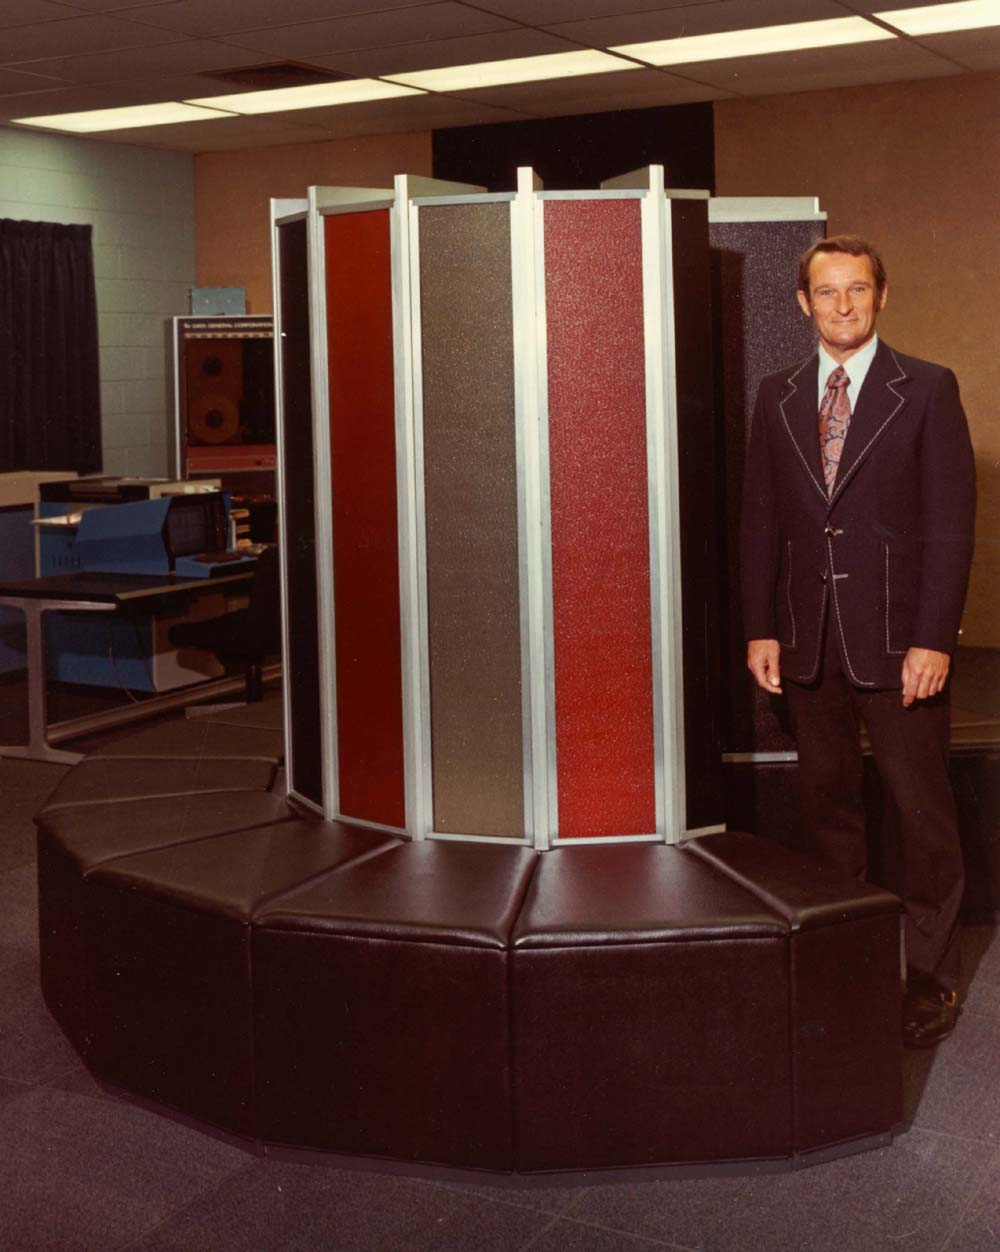 An early supercomputer